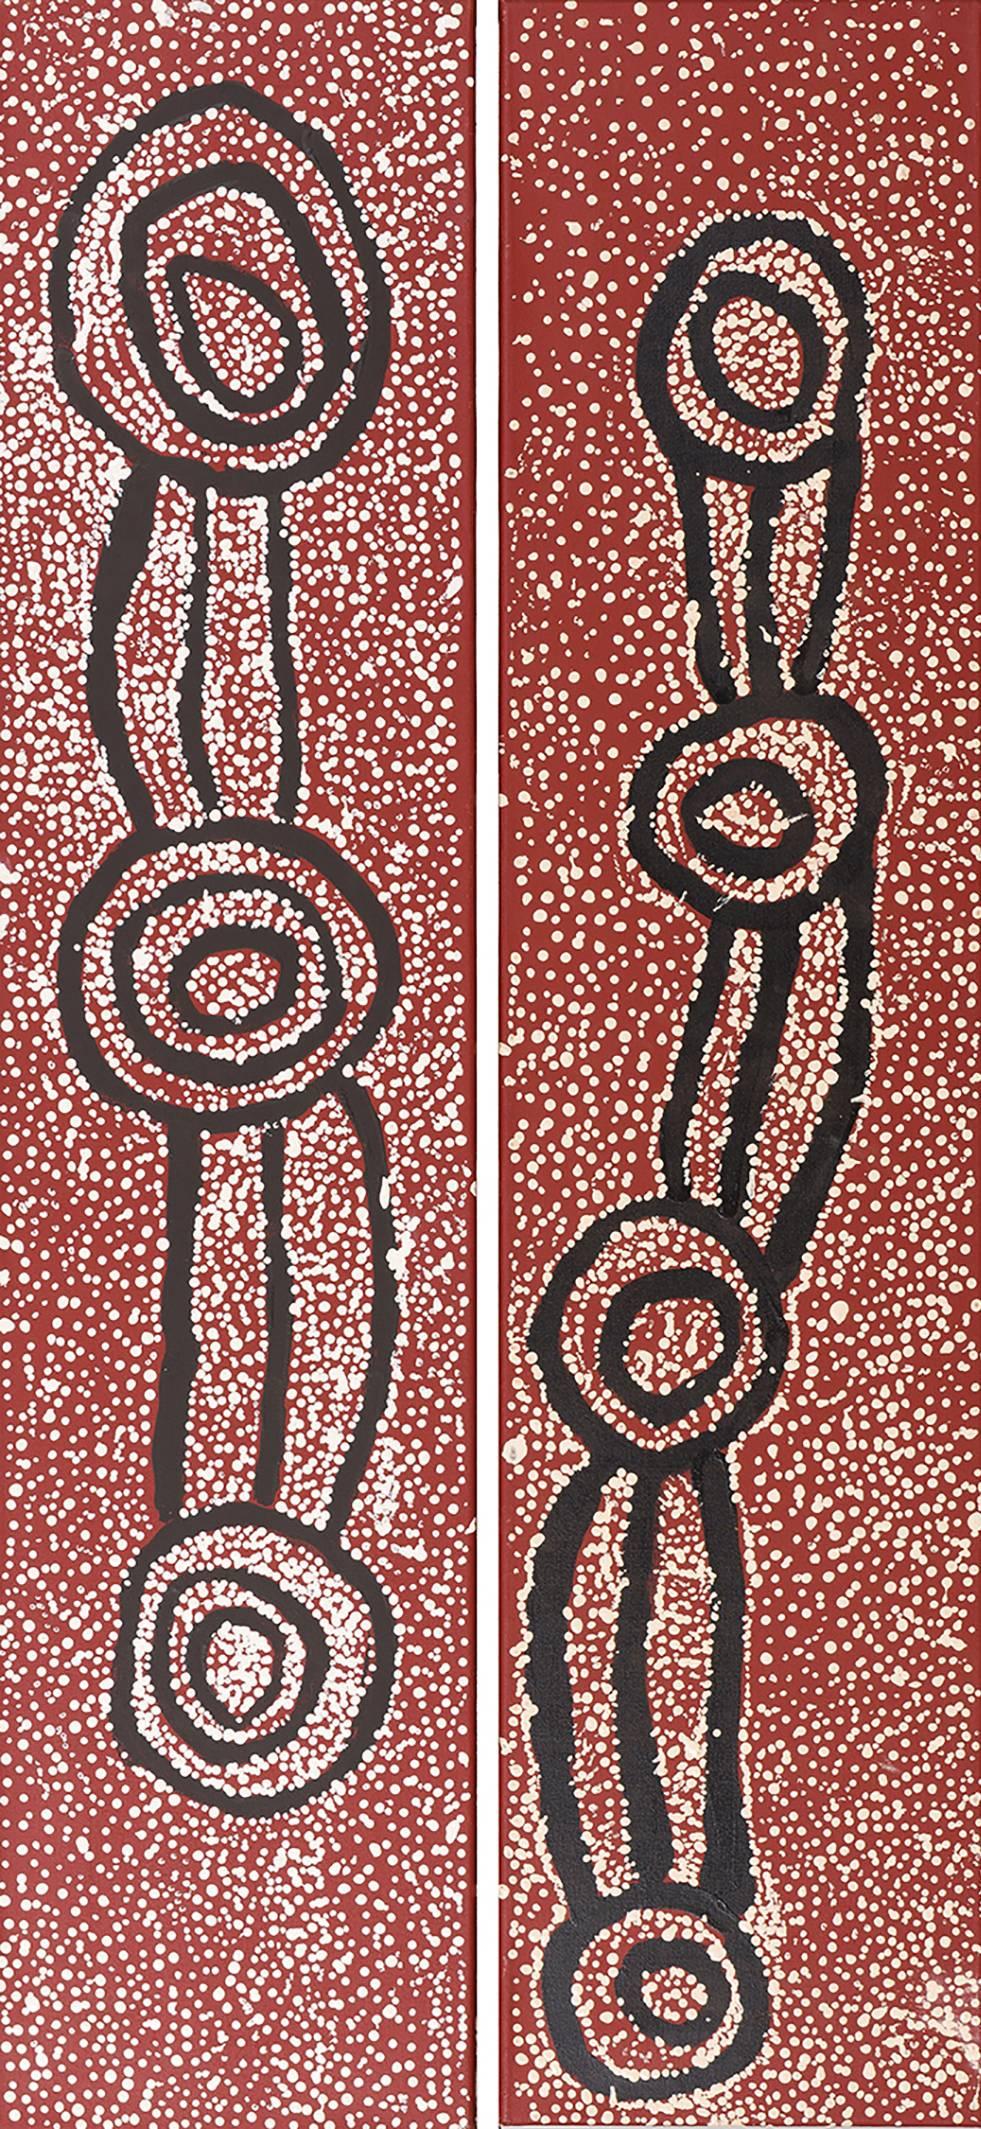 Tingari at Parayilypil by Australian Aboriginal Artist Peg Leg Tjampitjinpa - Painting by Pegleg Tjampitjinpa